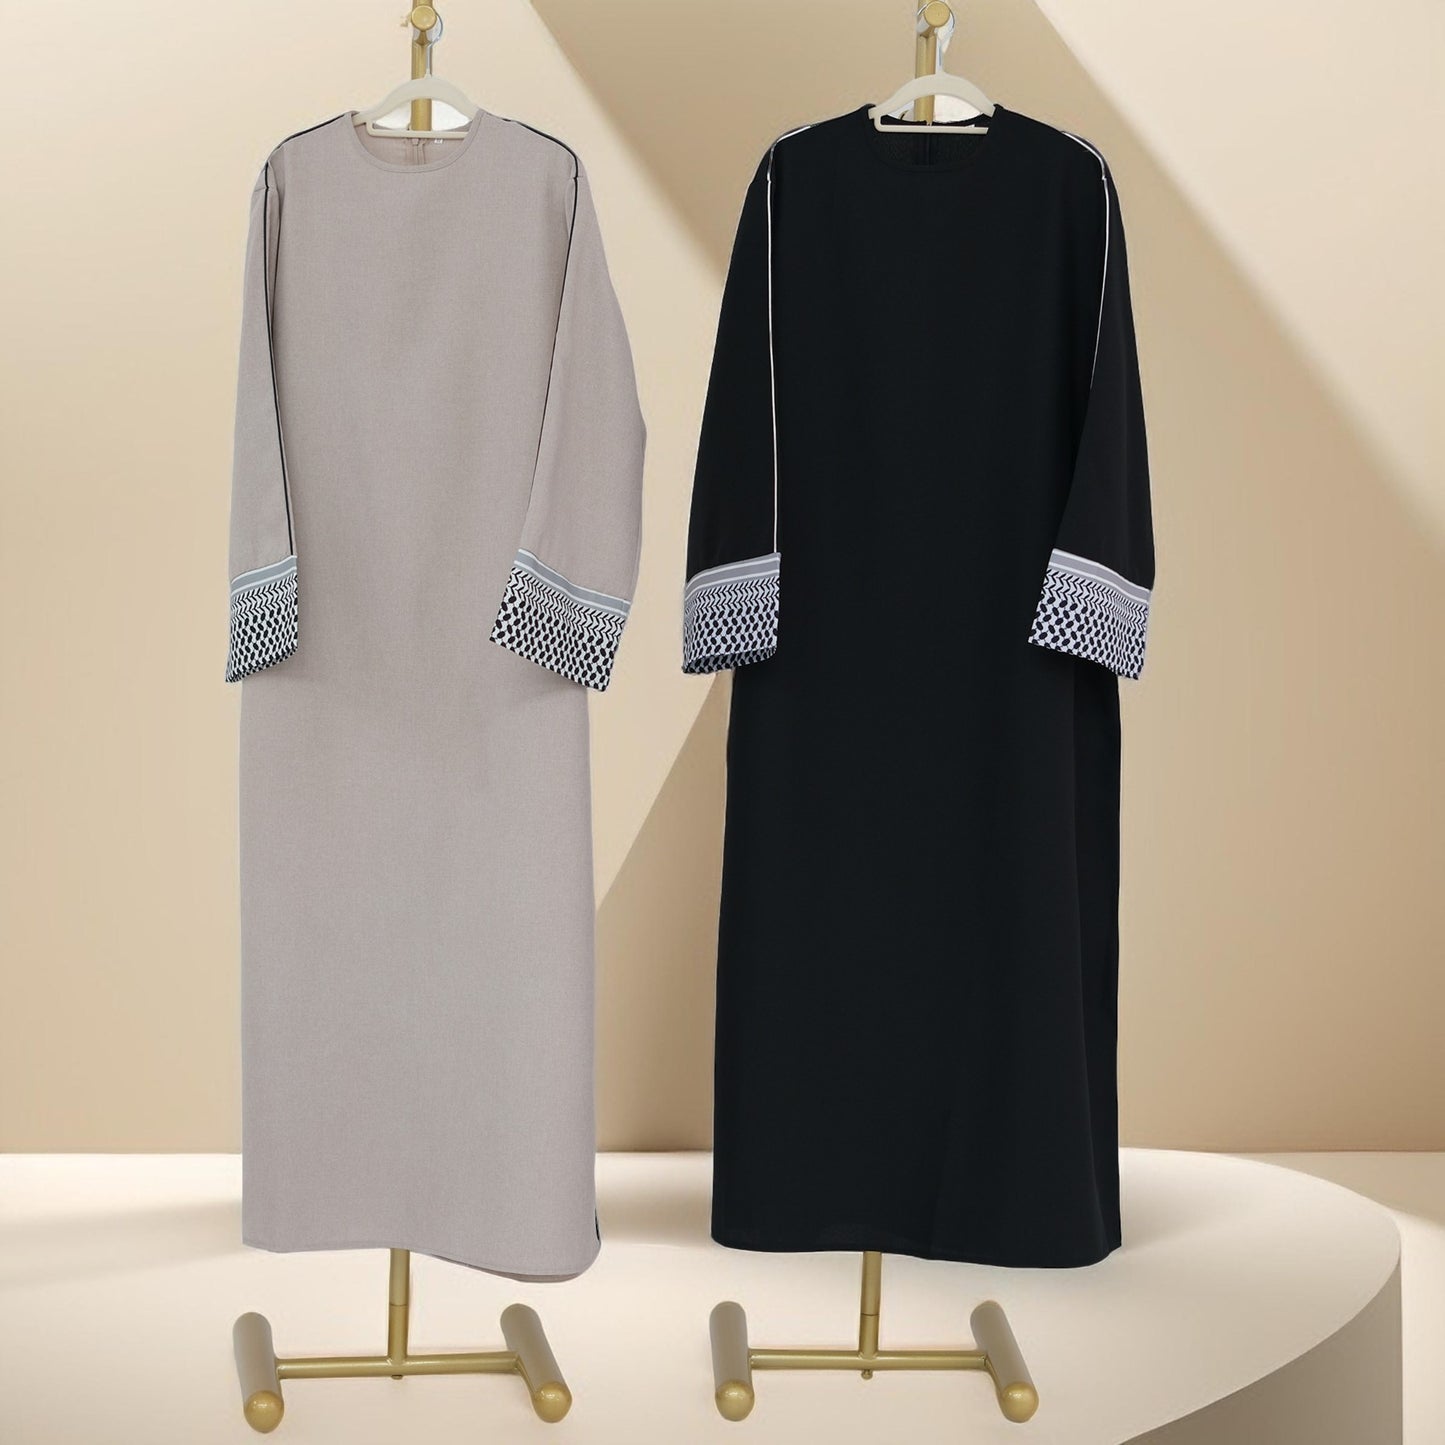 Palestine Kufiyah Inspired Linen Abaya - Try Modest Limited 